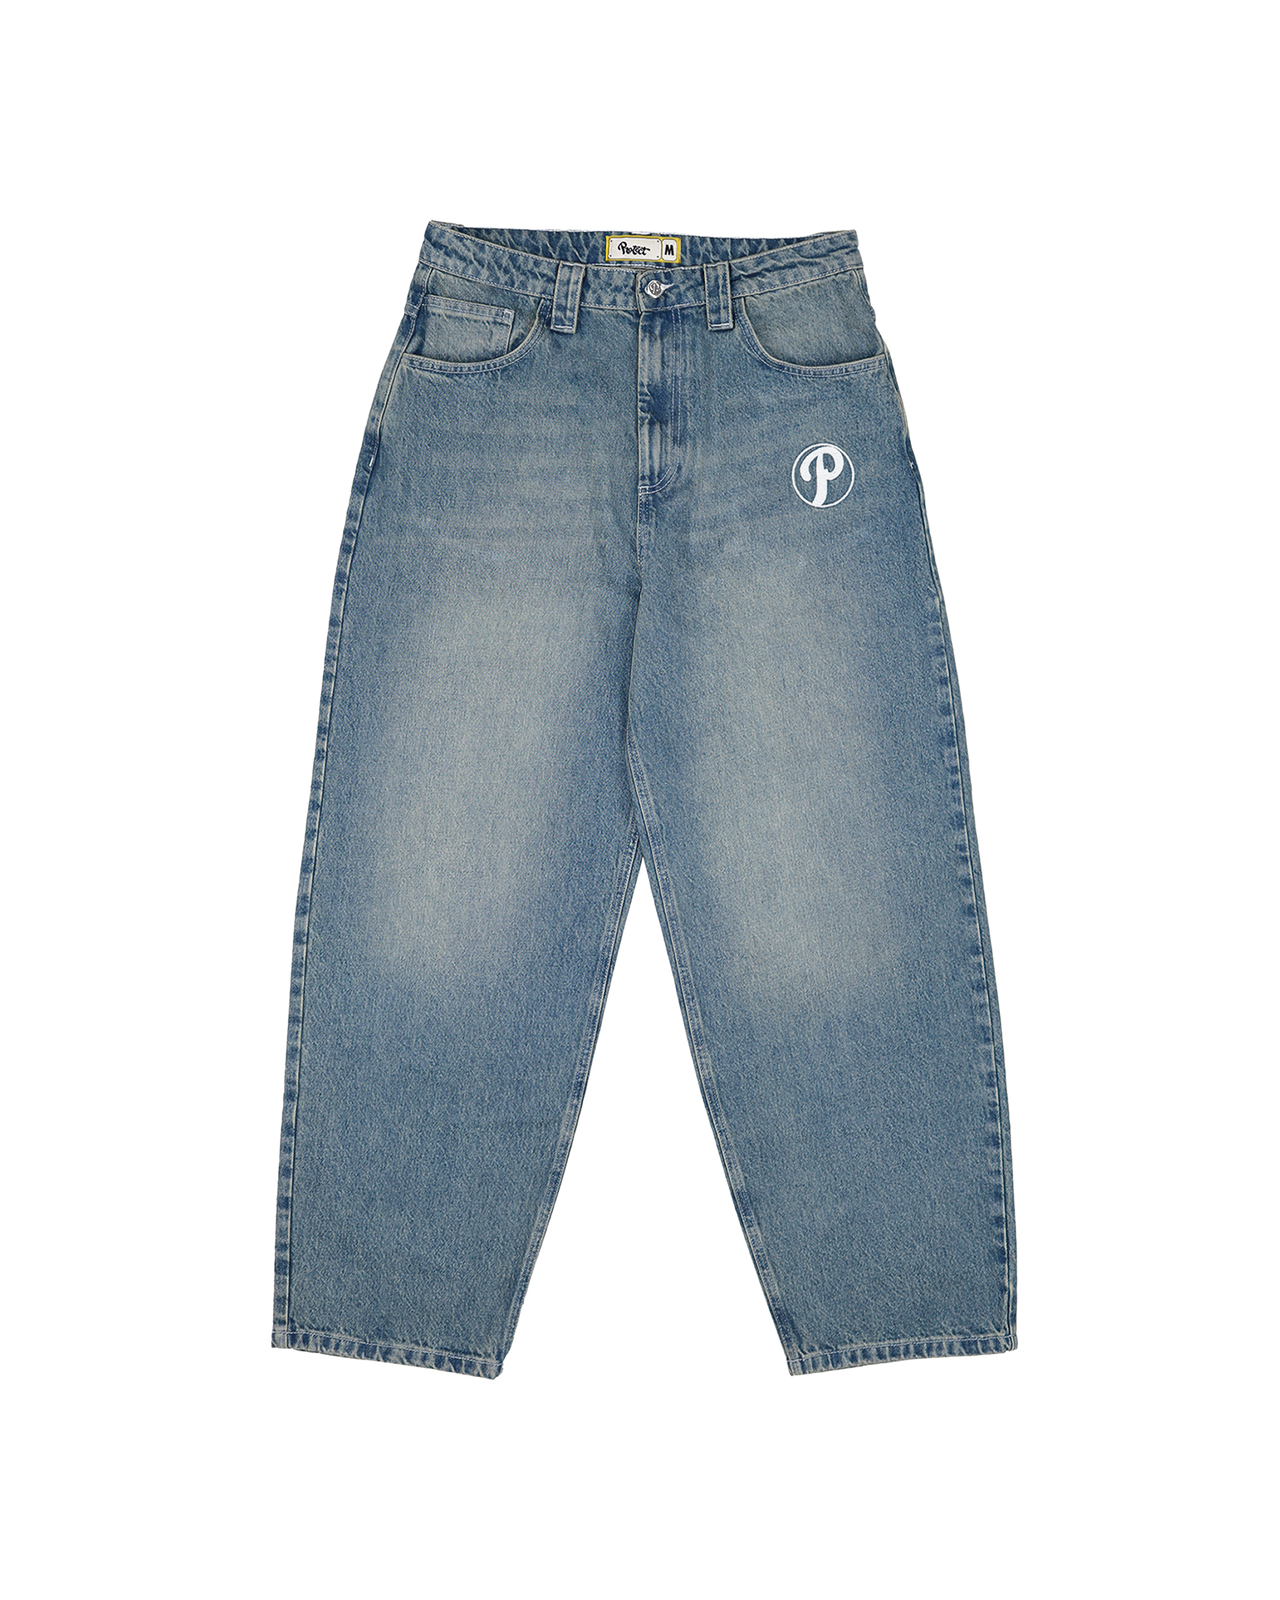 protect london jeans arrived 😴@protectegor @protect.ldn @peterfagnoni